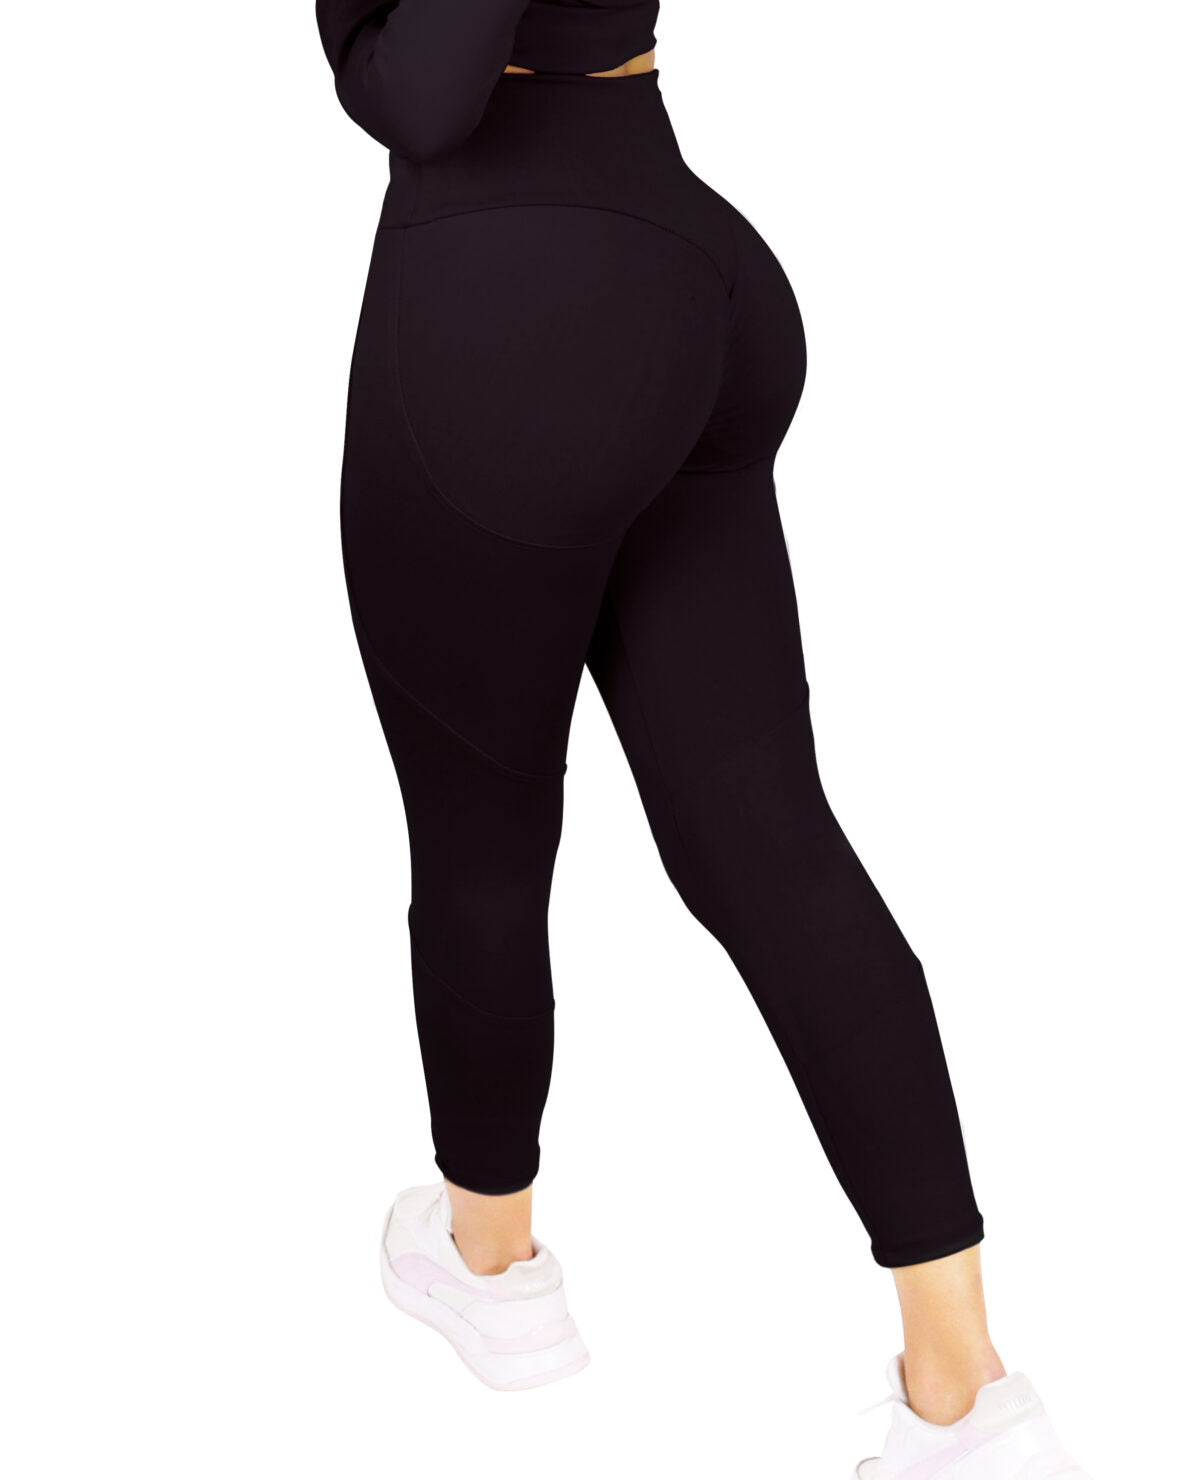 High waist hip lift sports leggings